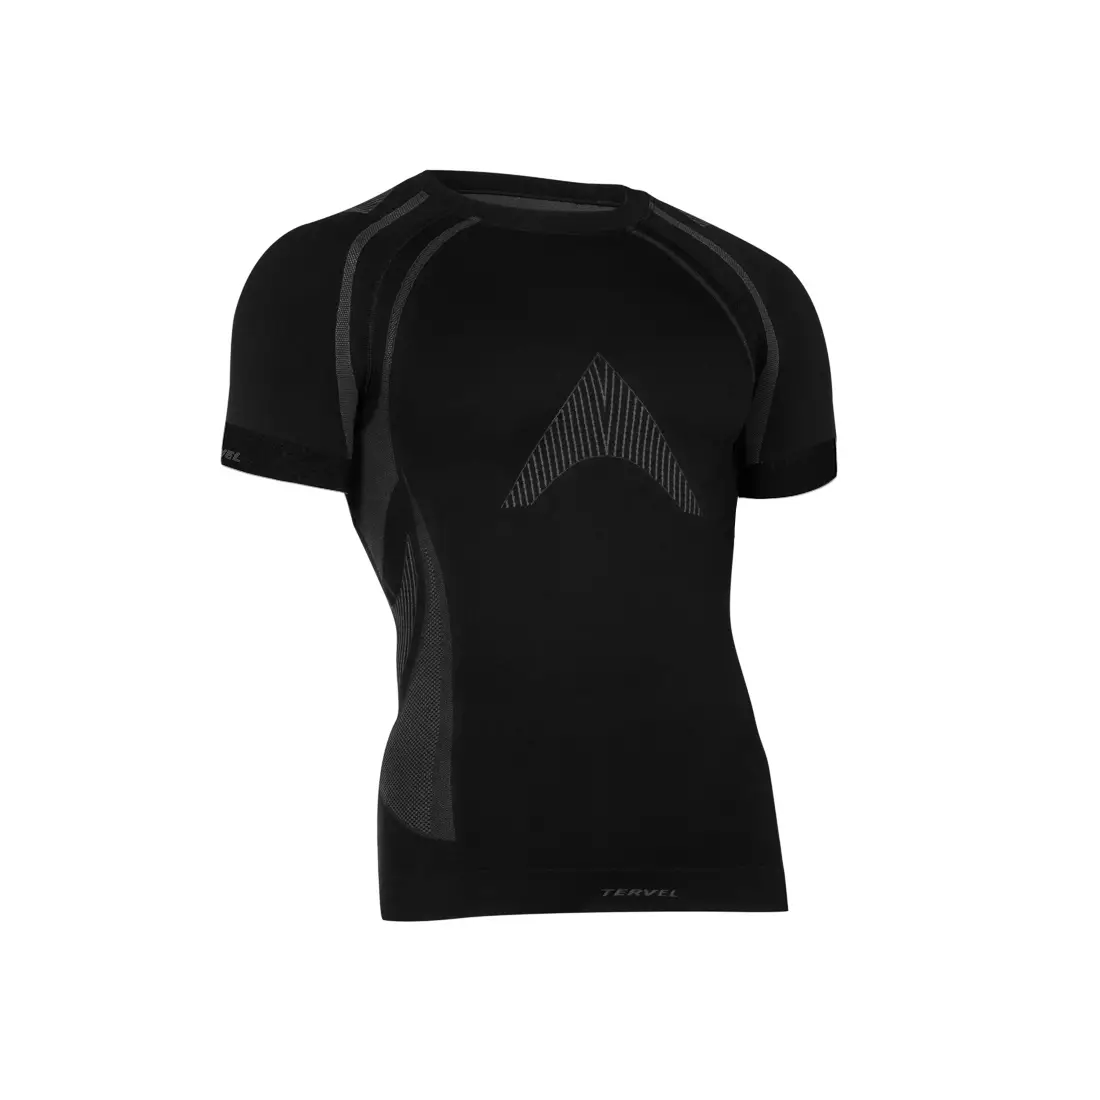 TERVEL - OPTILINE MOD-02 - men's thermal T-shirt, color: Black and gray